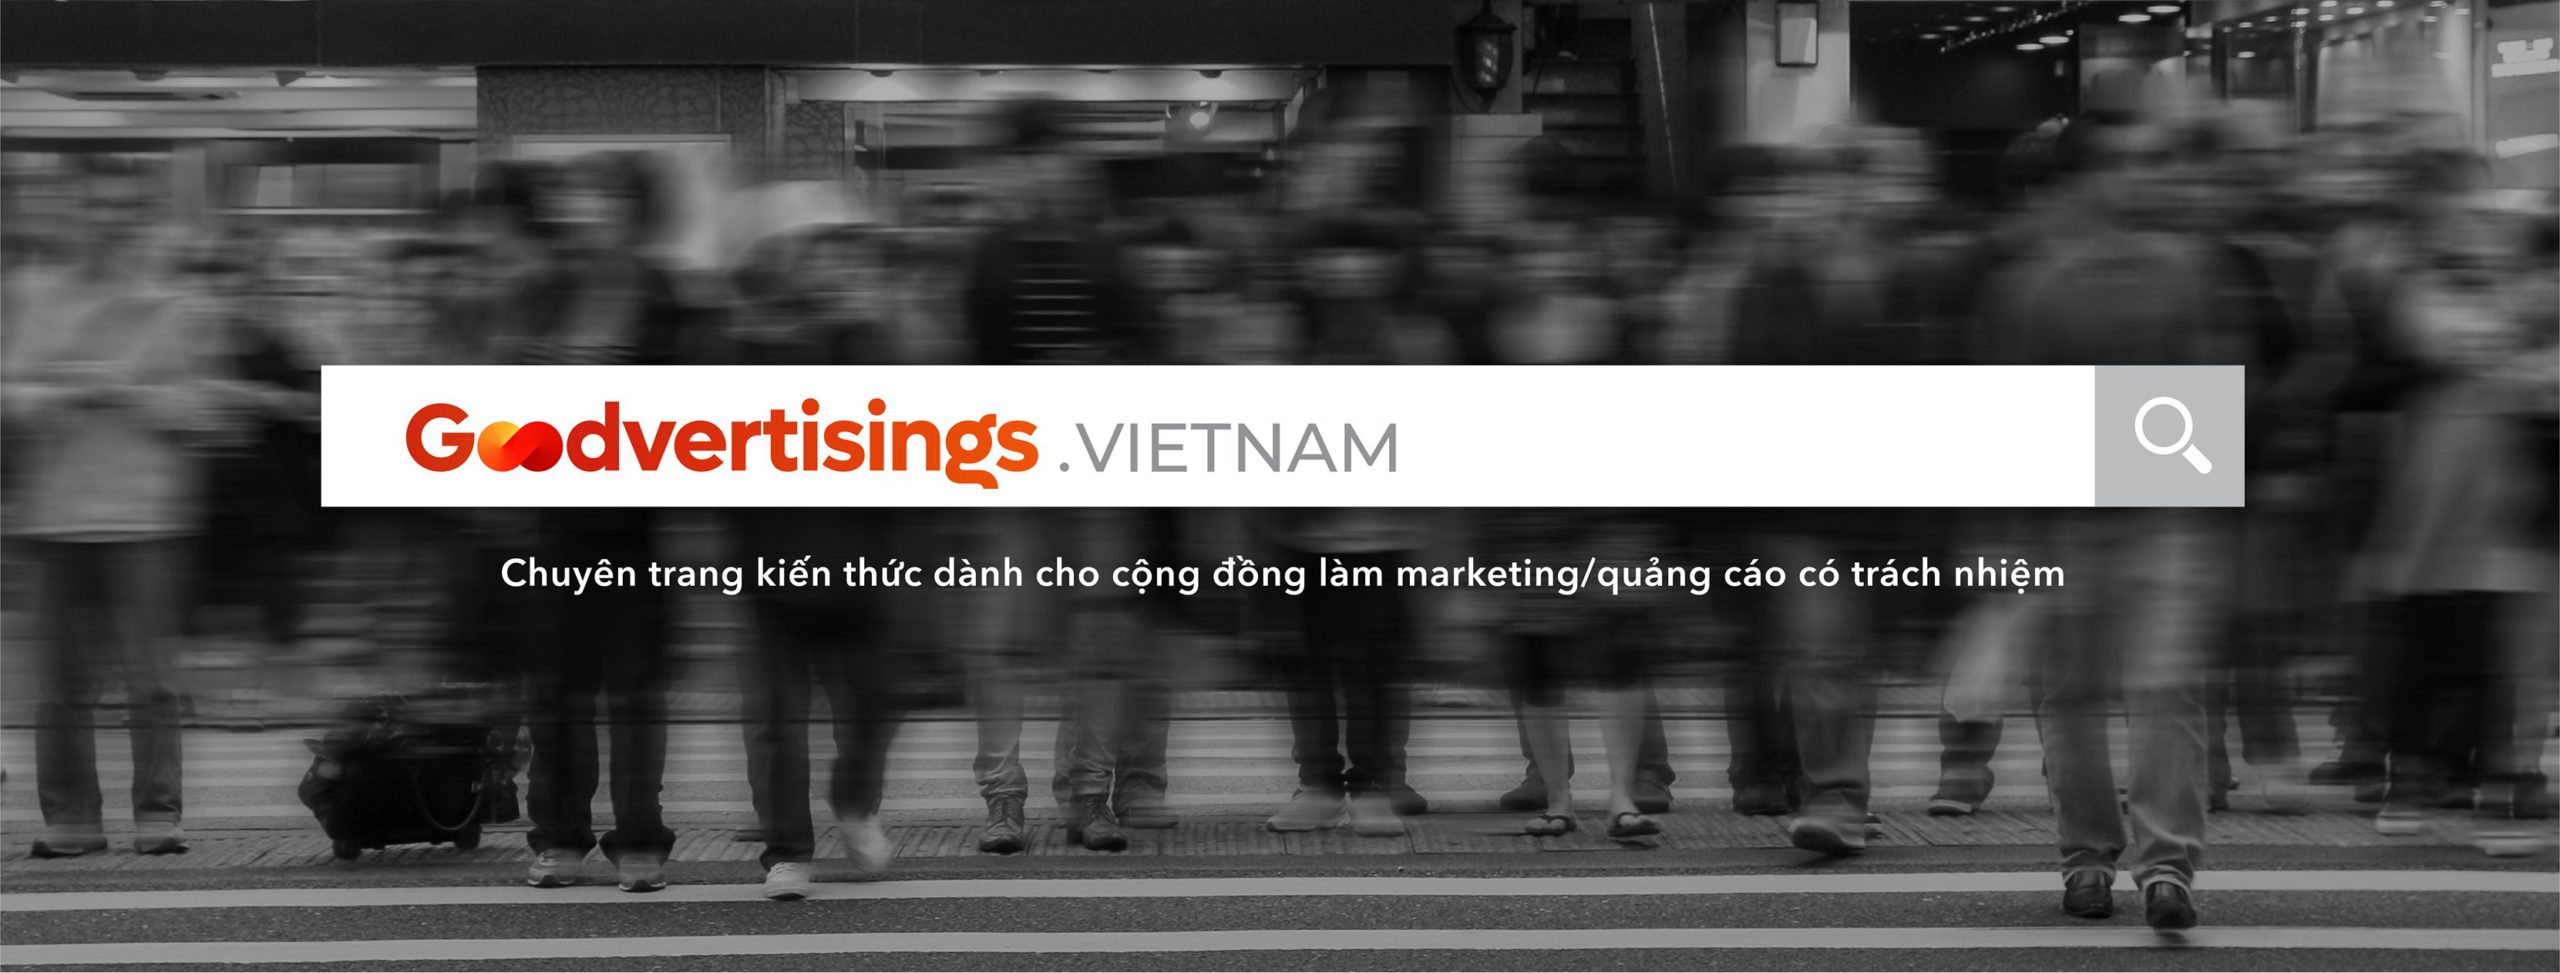 TUVA Communication - Goodvertising in Vietnam